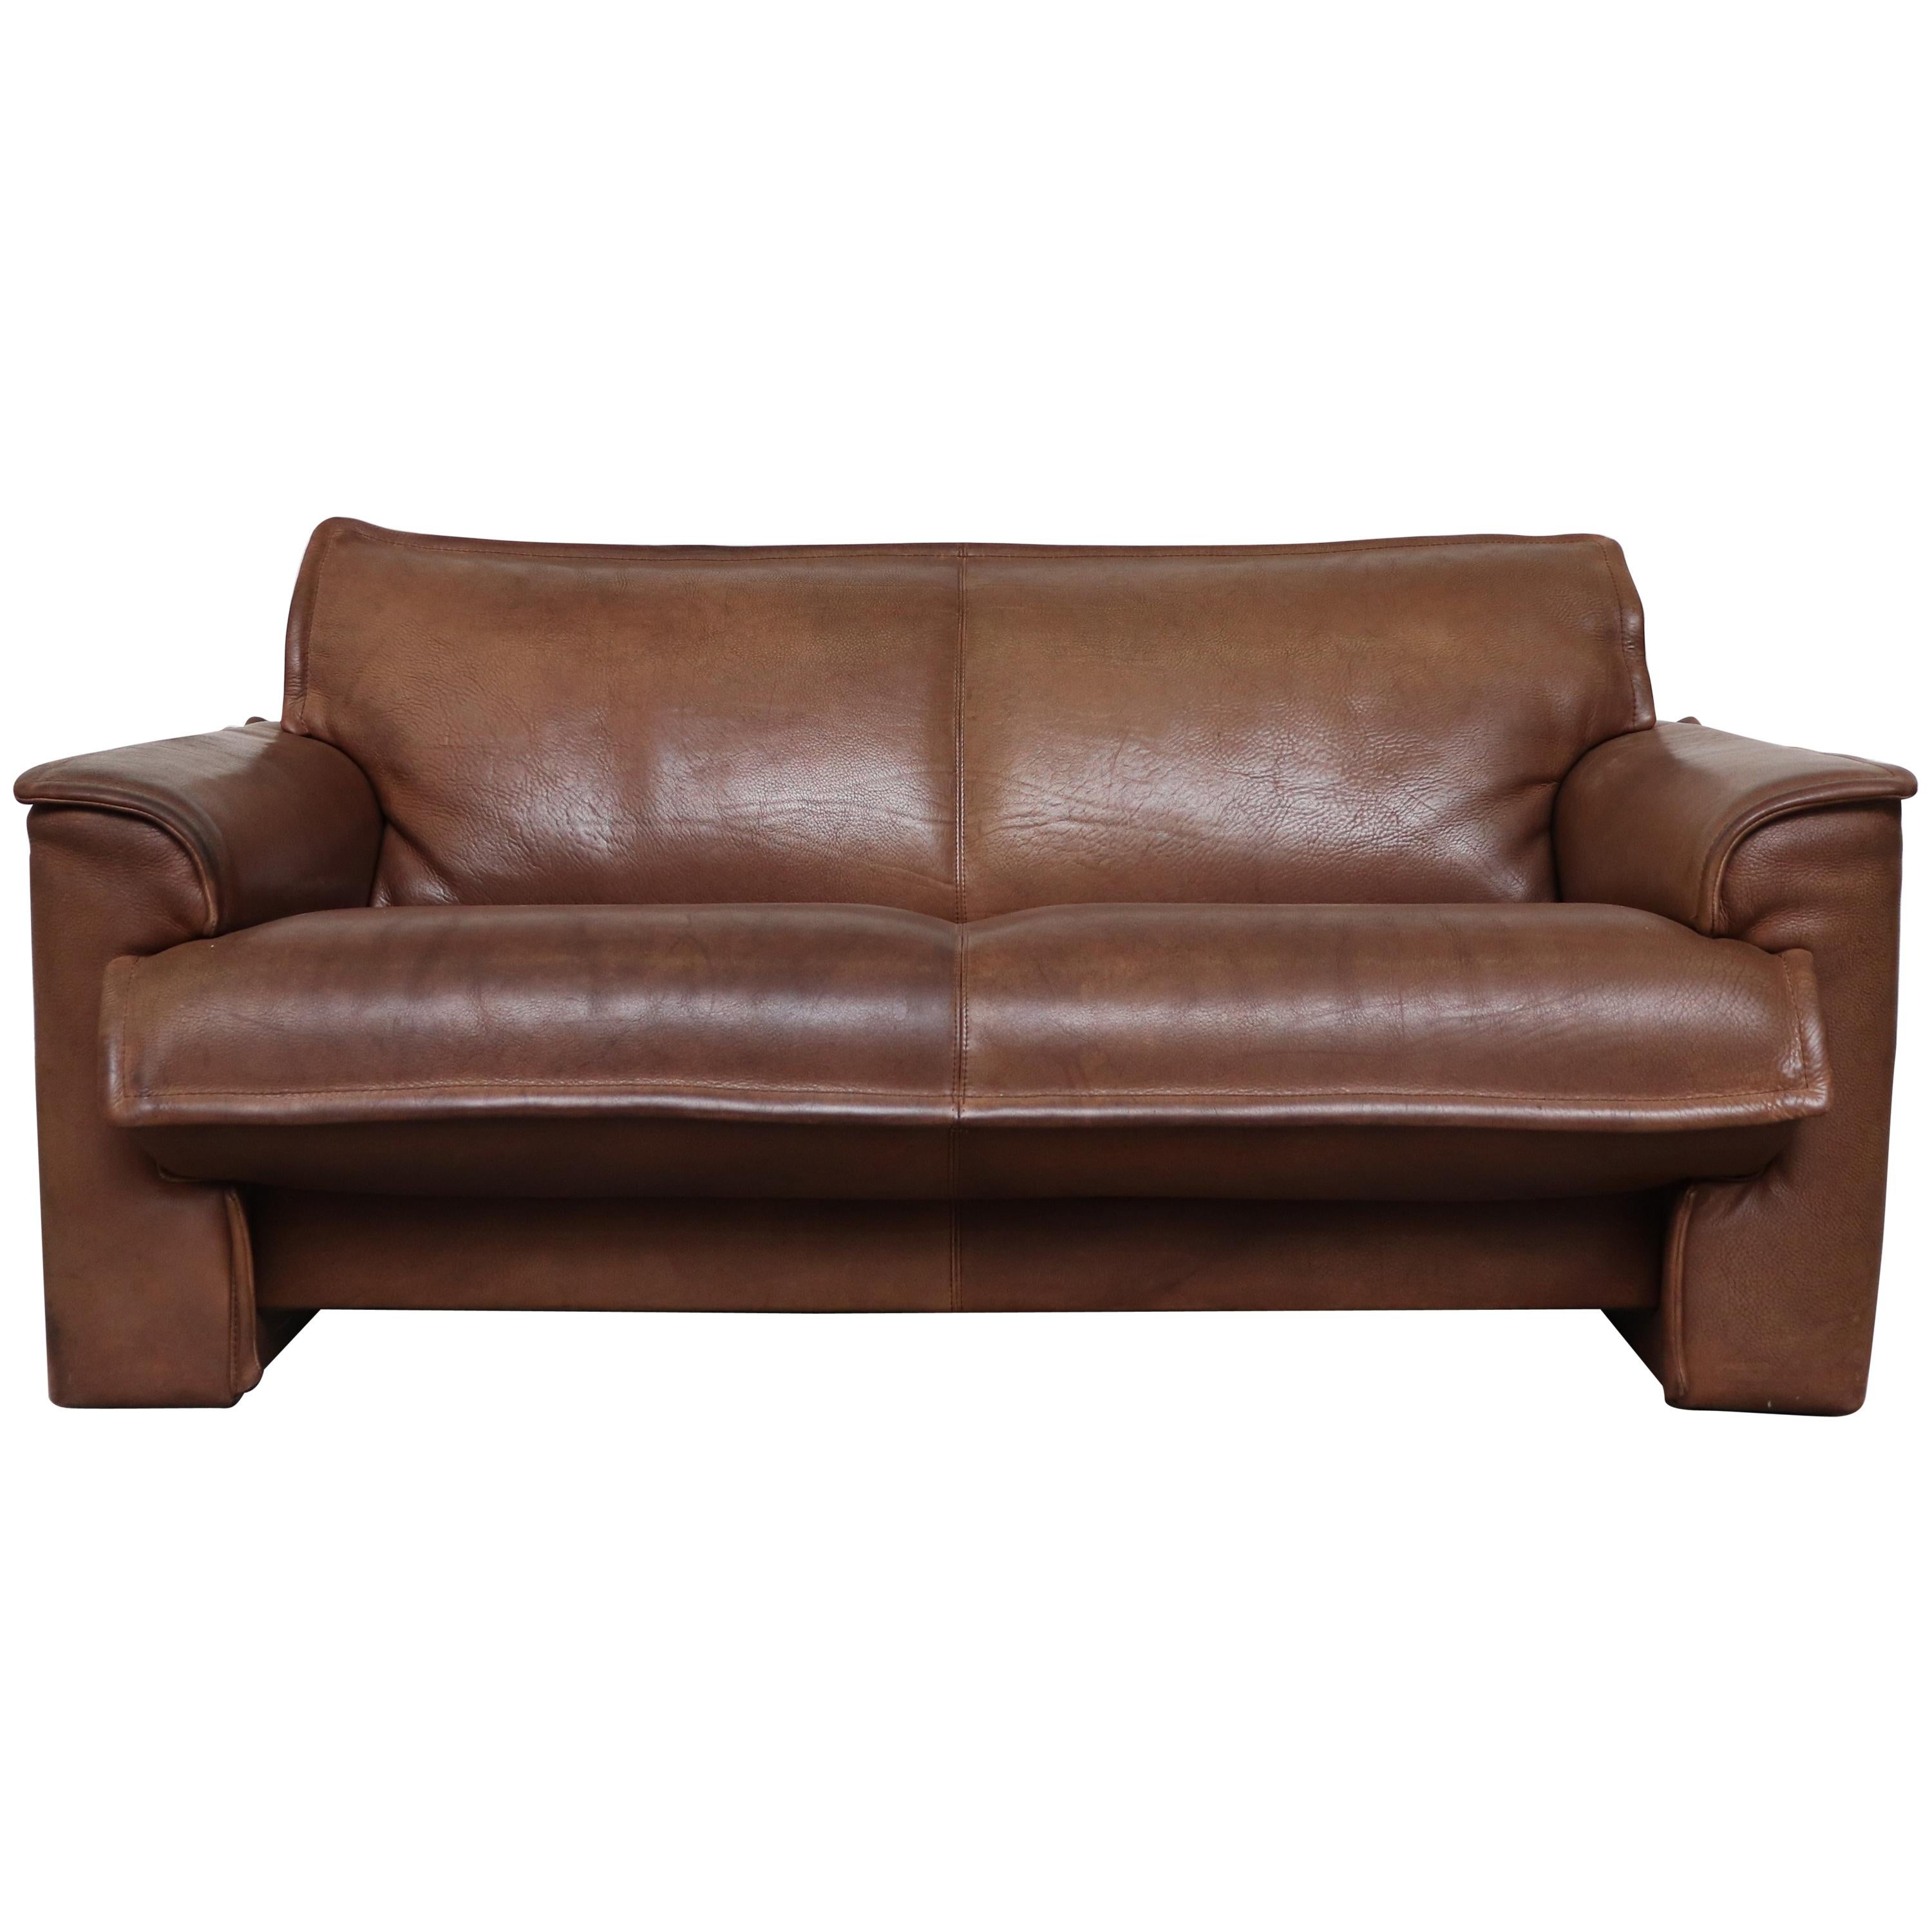 Leolux Buffalo Leather Loveseat Sofa